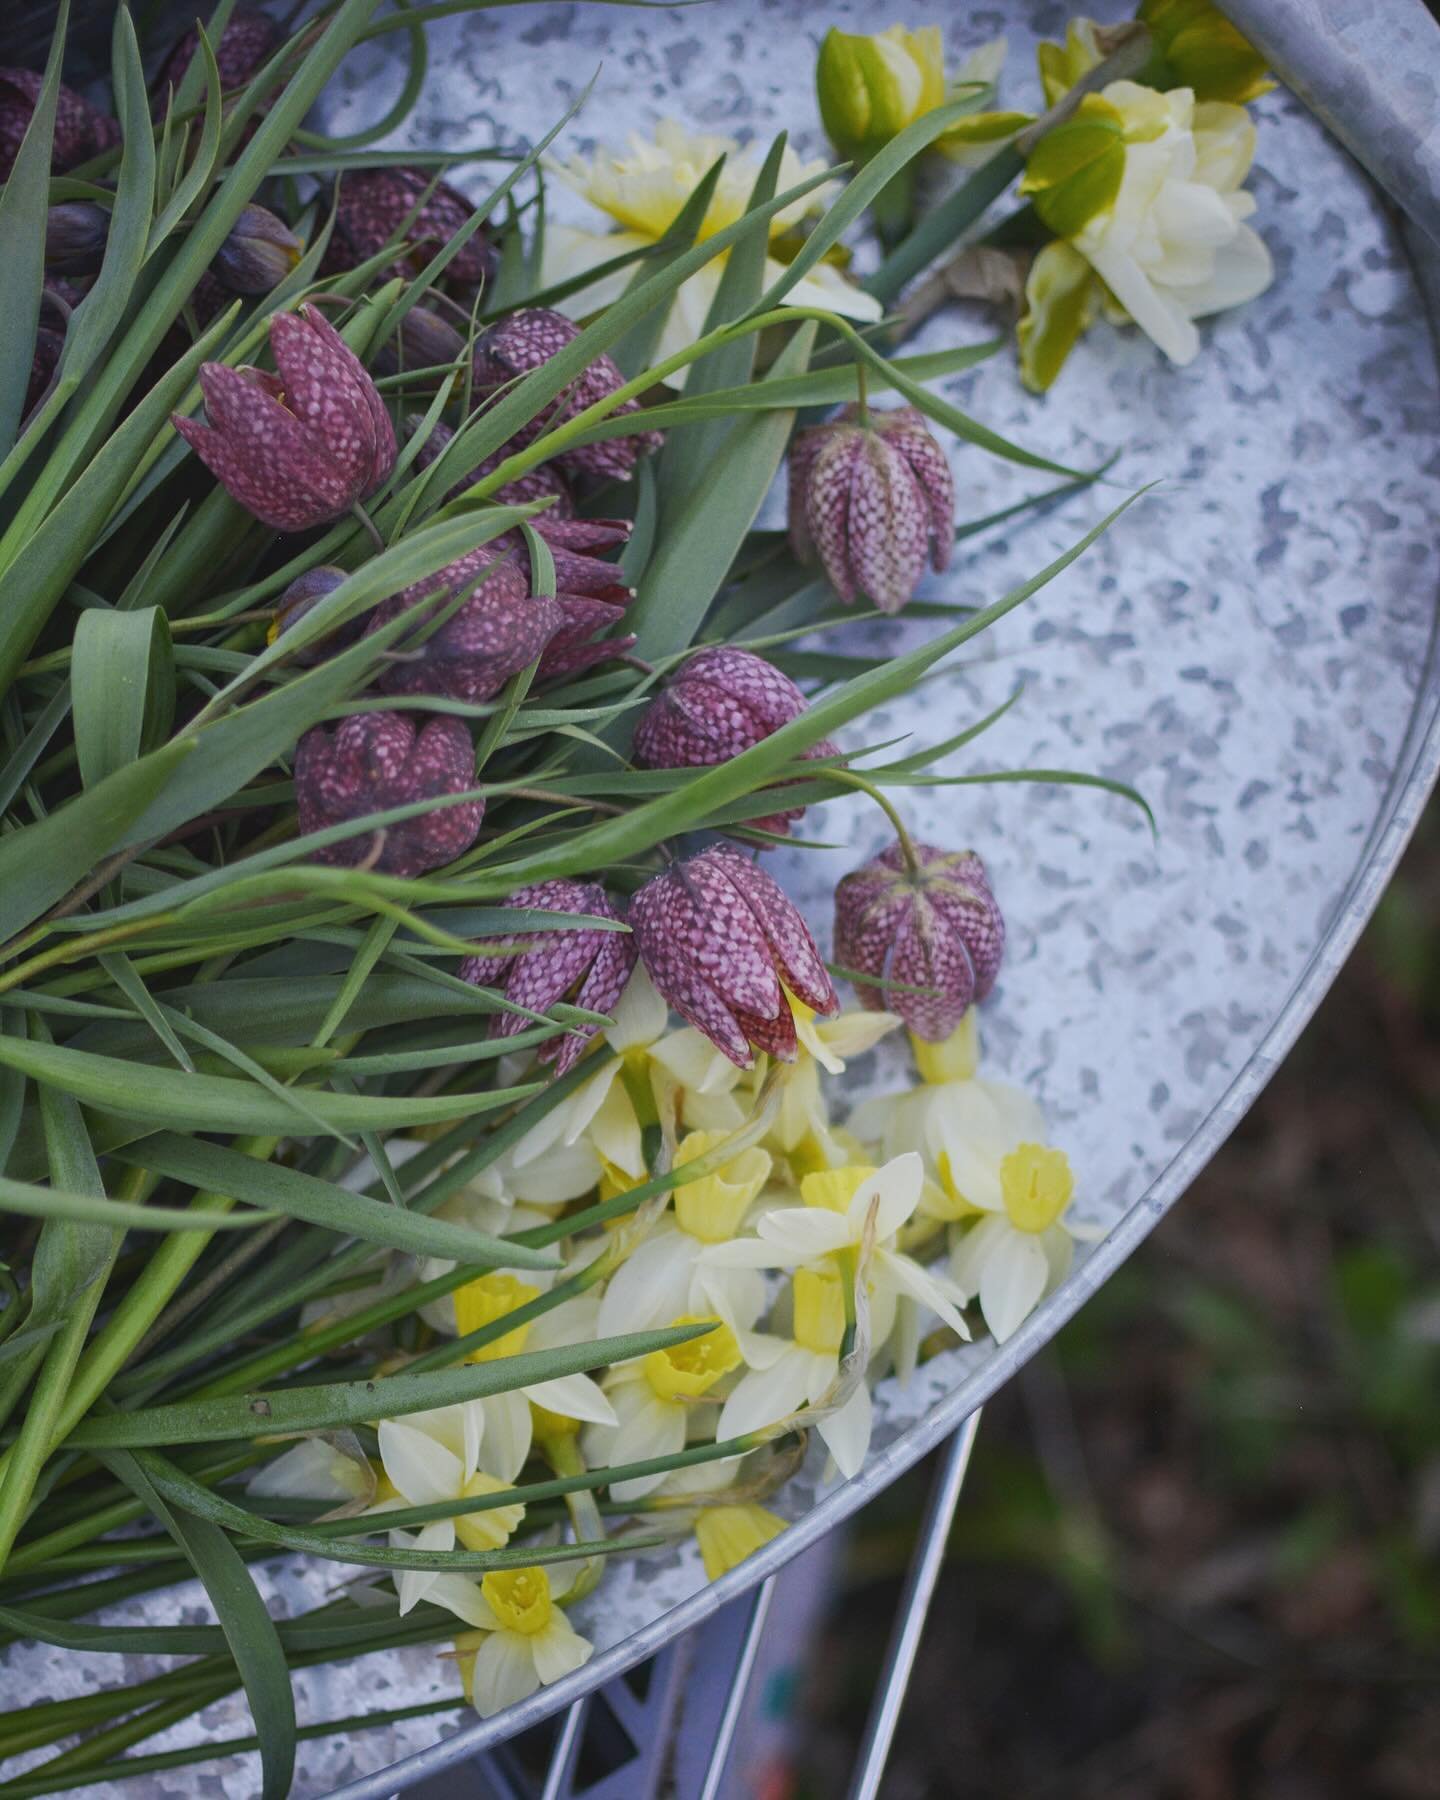 Morning harvest &mdash; a delightful chore 💛

#fritillaria #daffodil #grownnotflown #farmerflorist #duluthmn #goodmorning #springbulbs #springflowers #aseasonalyear